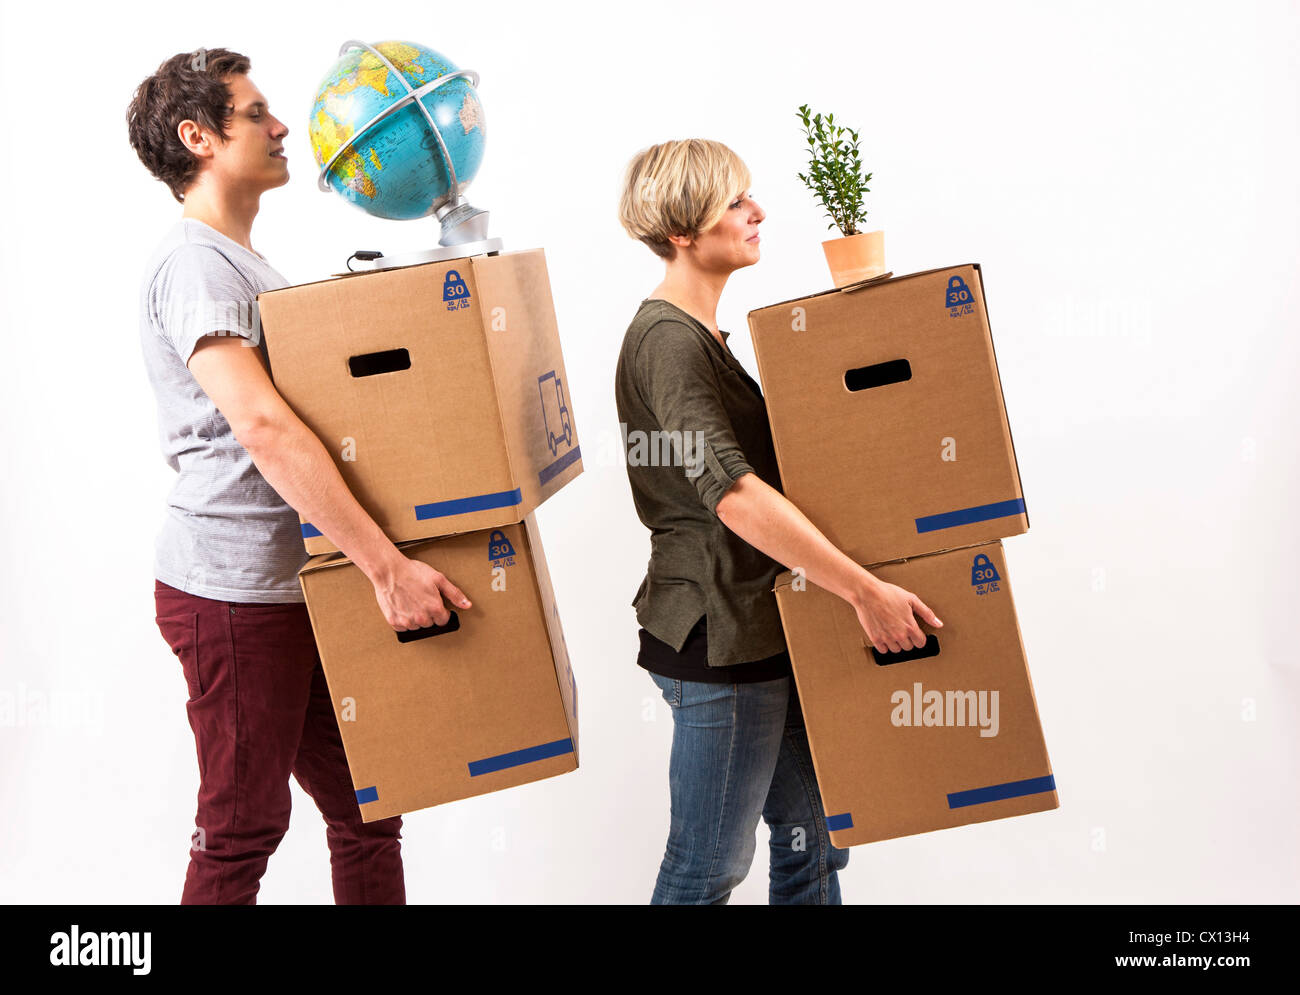 Symbolfoto Umzug, Auszug, umziehen. Junges Paar trägt Umzugskartons, Zimmerpflanze und Globus. Umzugskisten Pappkarton aus. Foto Stock